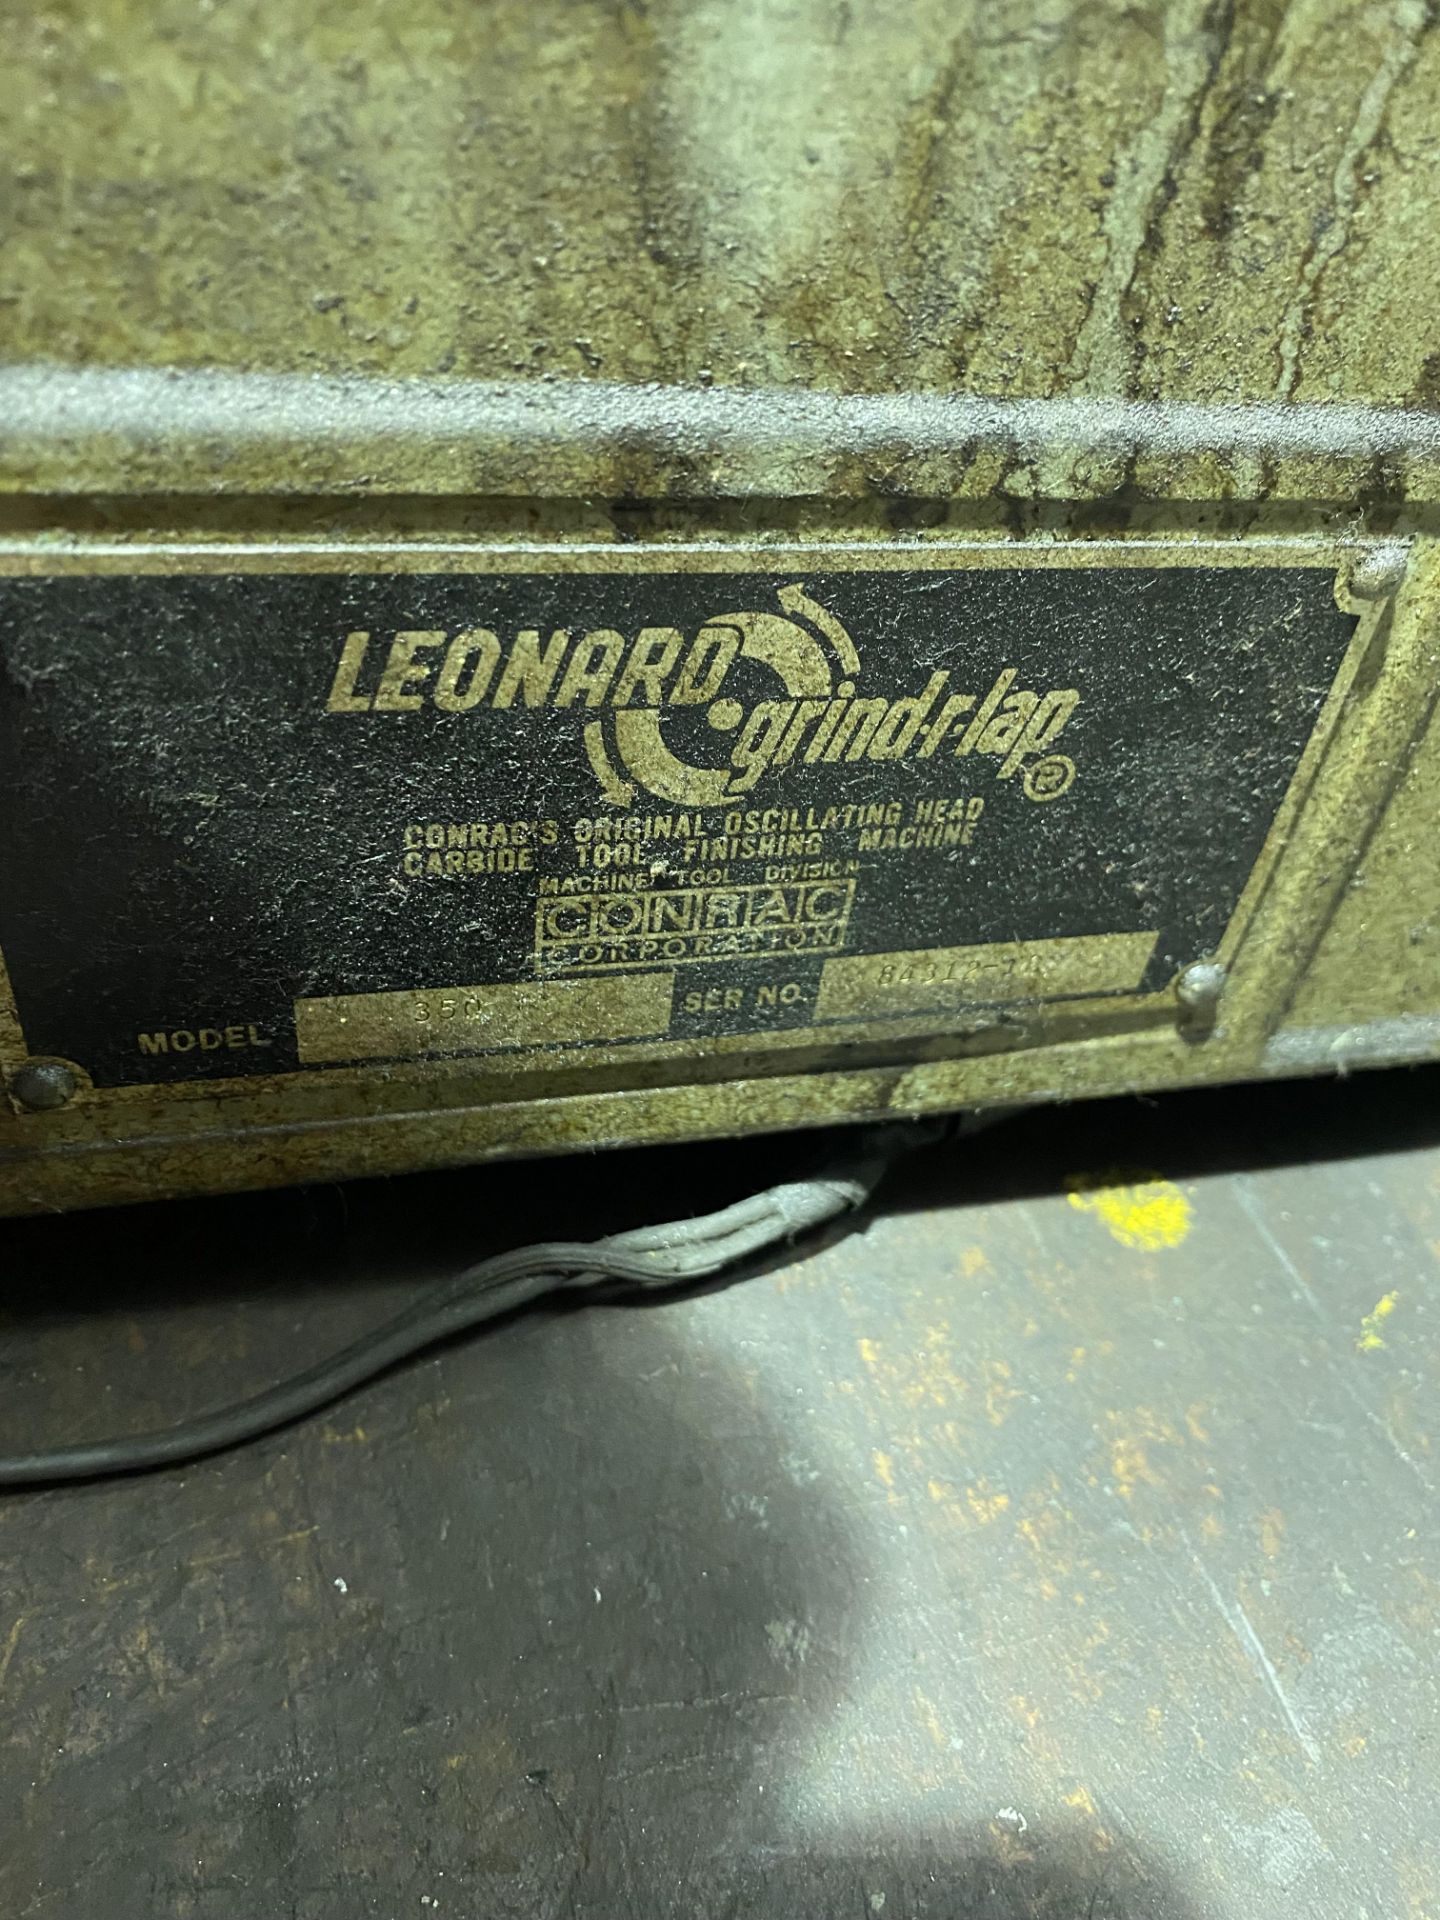 Leonard Grind Lap Carbide Tool Sharpener Model 350, S/n: 84312162, with Diamond Wheel - Image 2 of 2